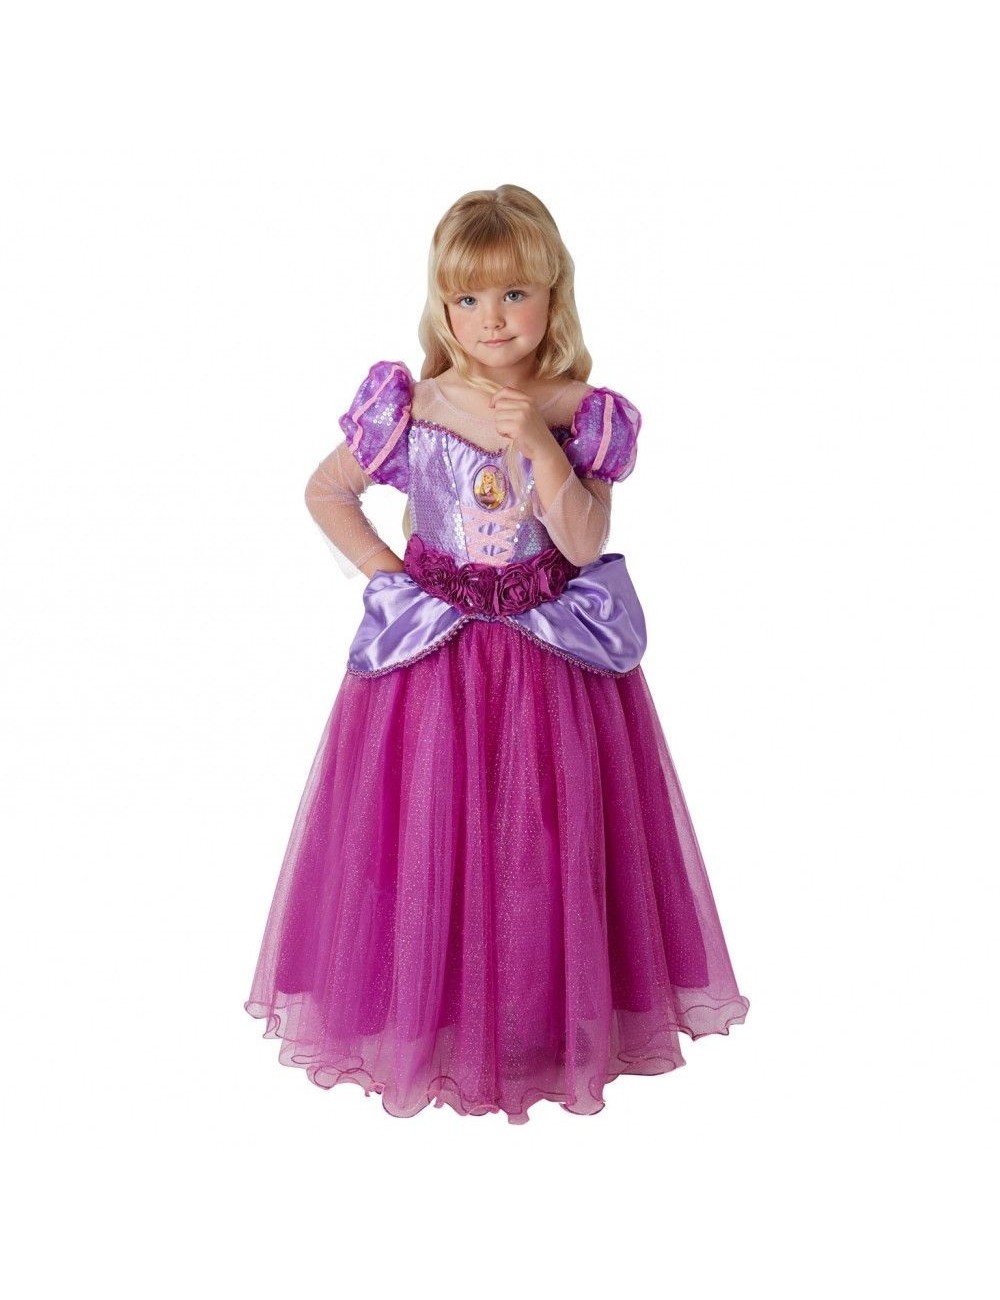 Rochie Rapunzel Premium, copii 3-8 ani